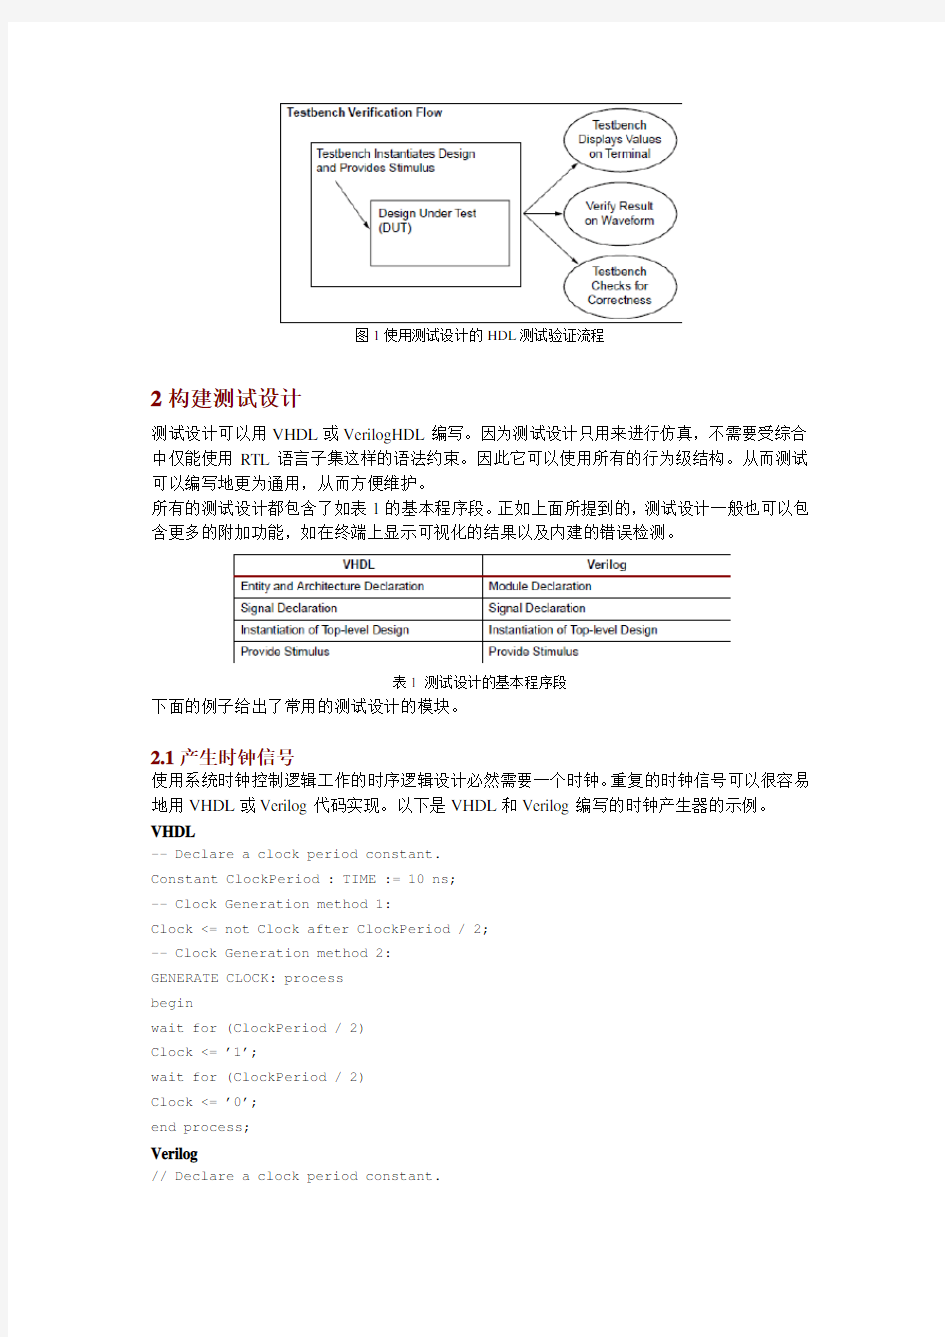 Writing+Efficient+Testbenches中文翻译